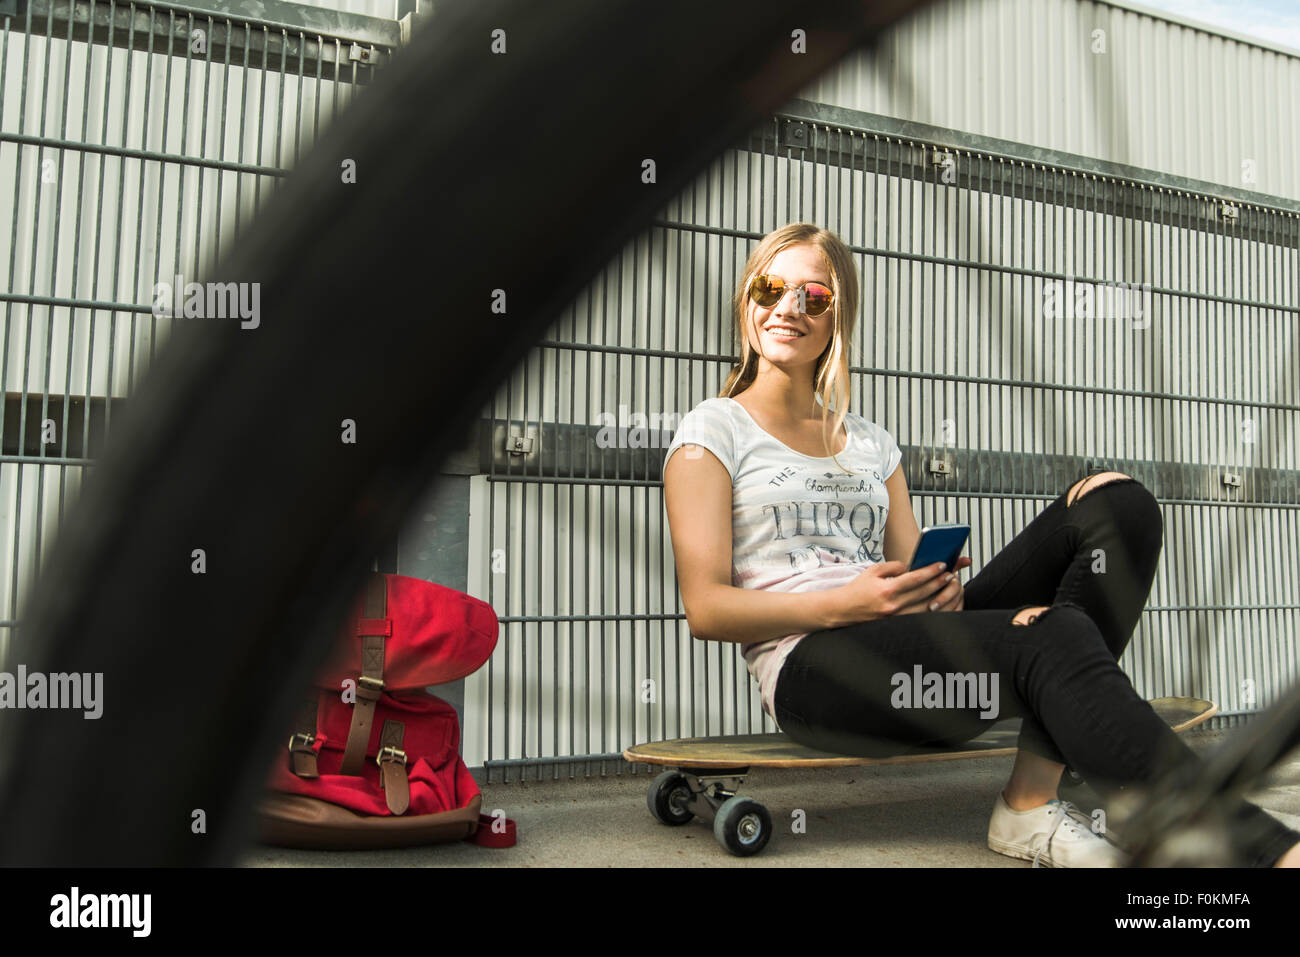 Teenage girl sitting on skateboard holding cell phone Stock Photo